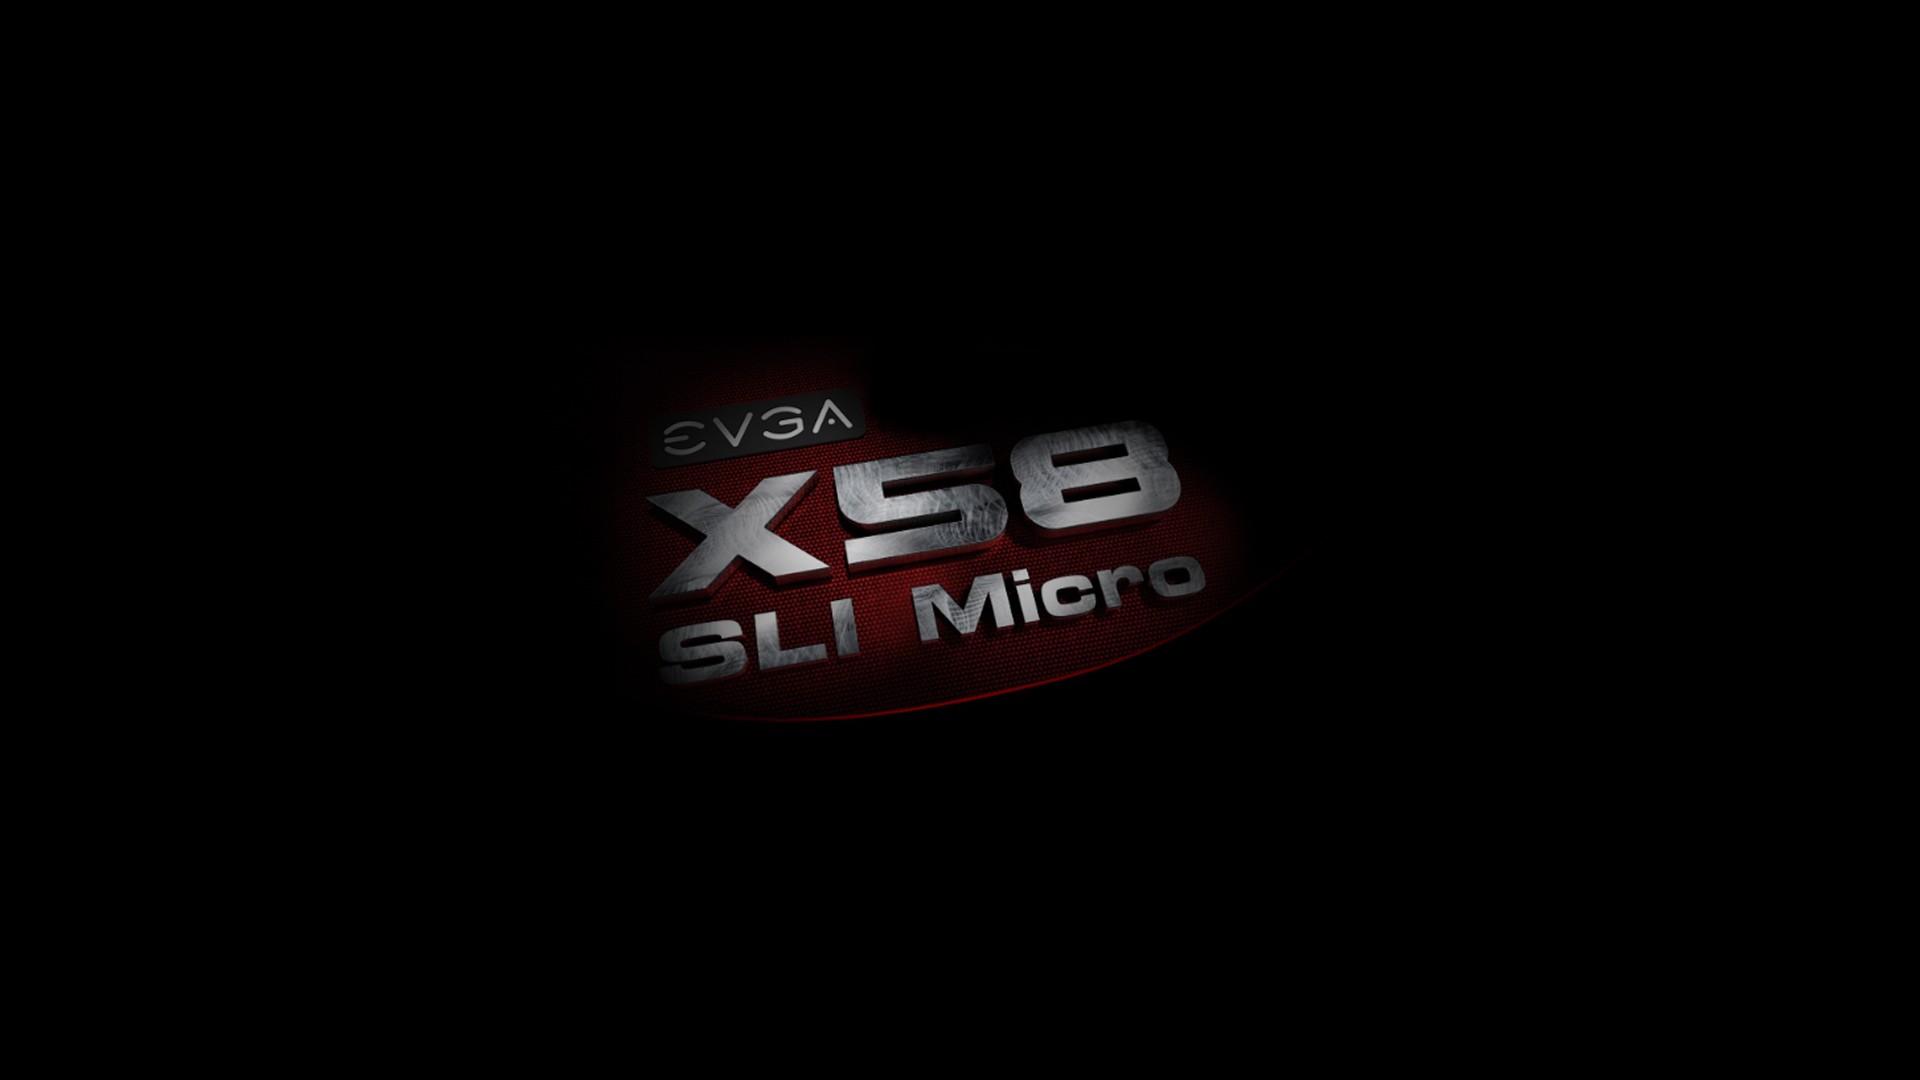 Red Evga X58 Sli Micro Leandrojvarini HD Wallpaper General